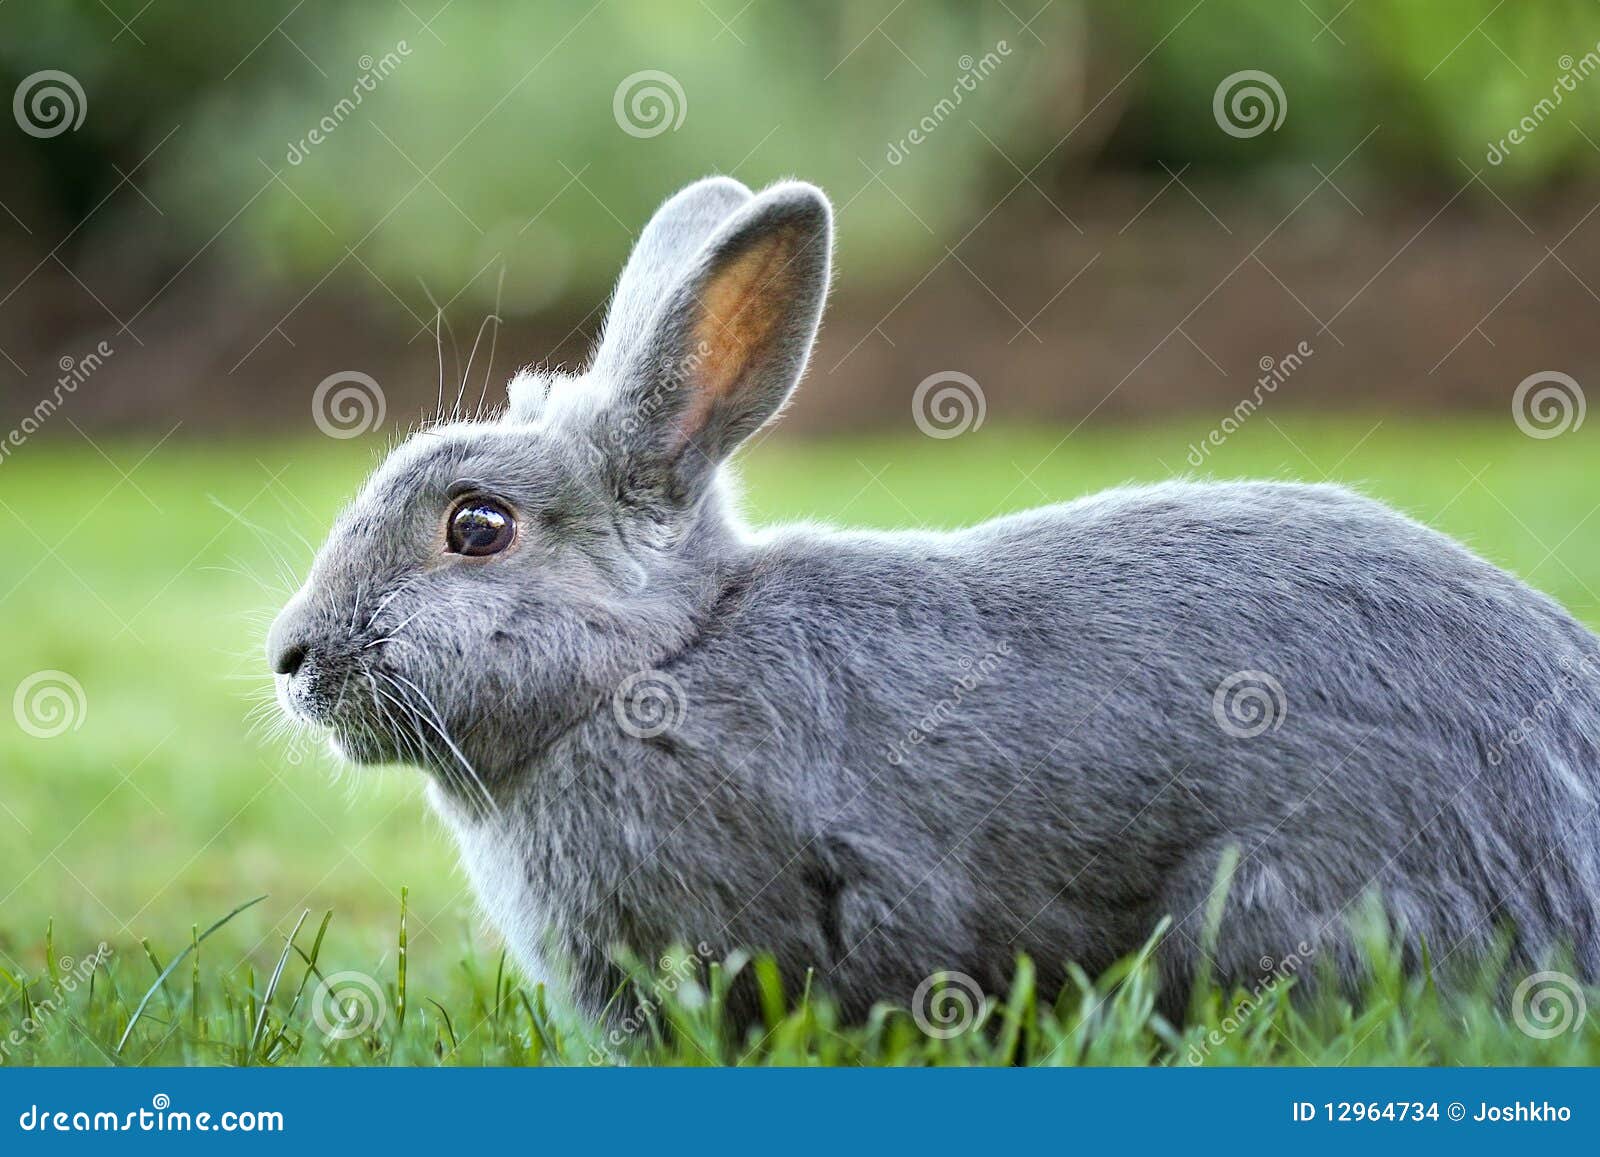 Gray Bunny Rabbit Stock Images - Image: 12964734